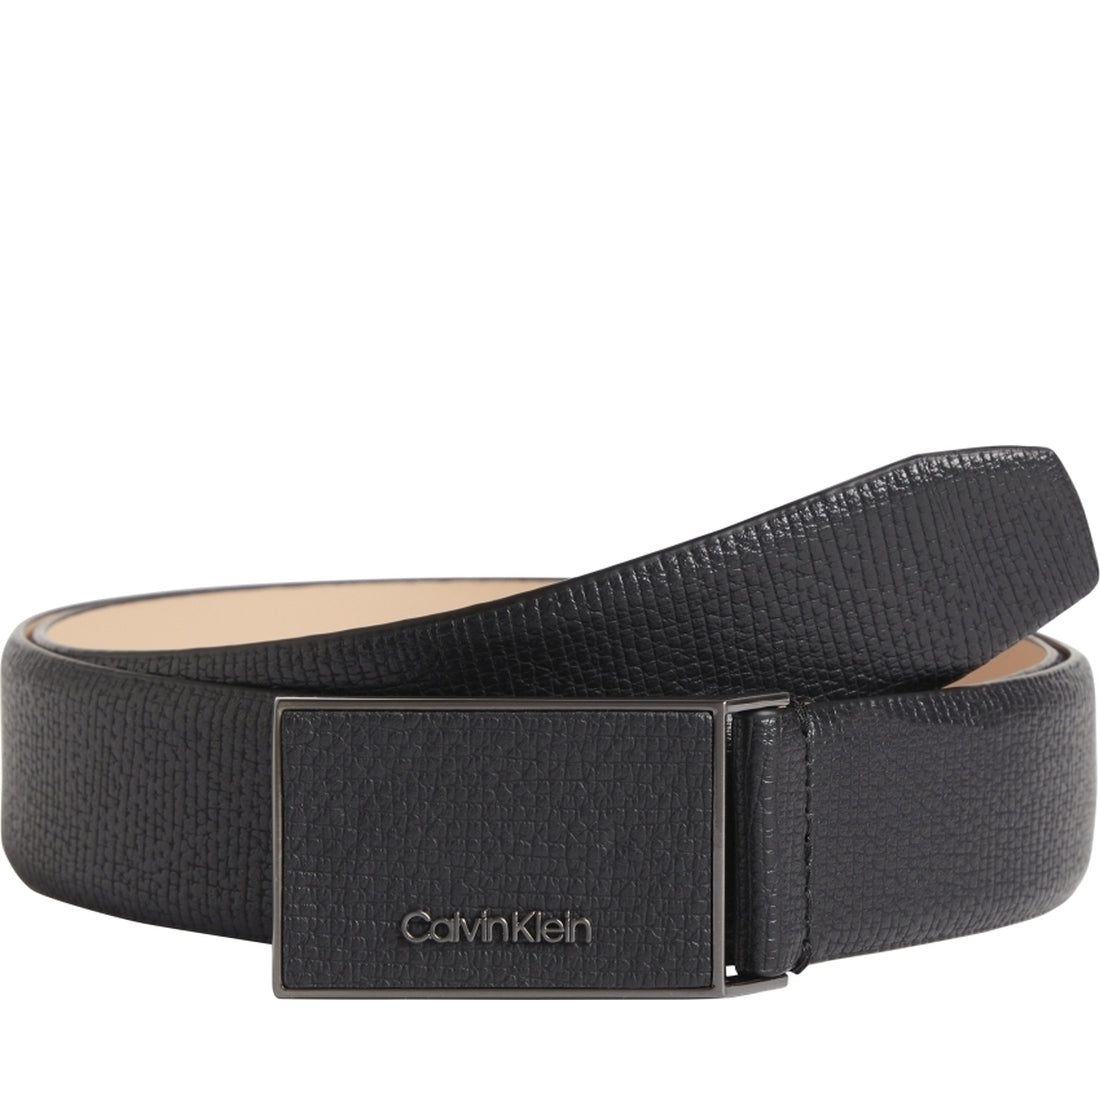 Calvin Klein mens Black leather inlay plaque pal 35mm belts | Vilbury London